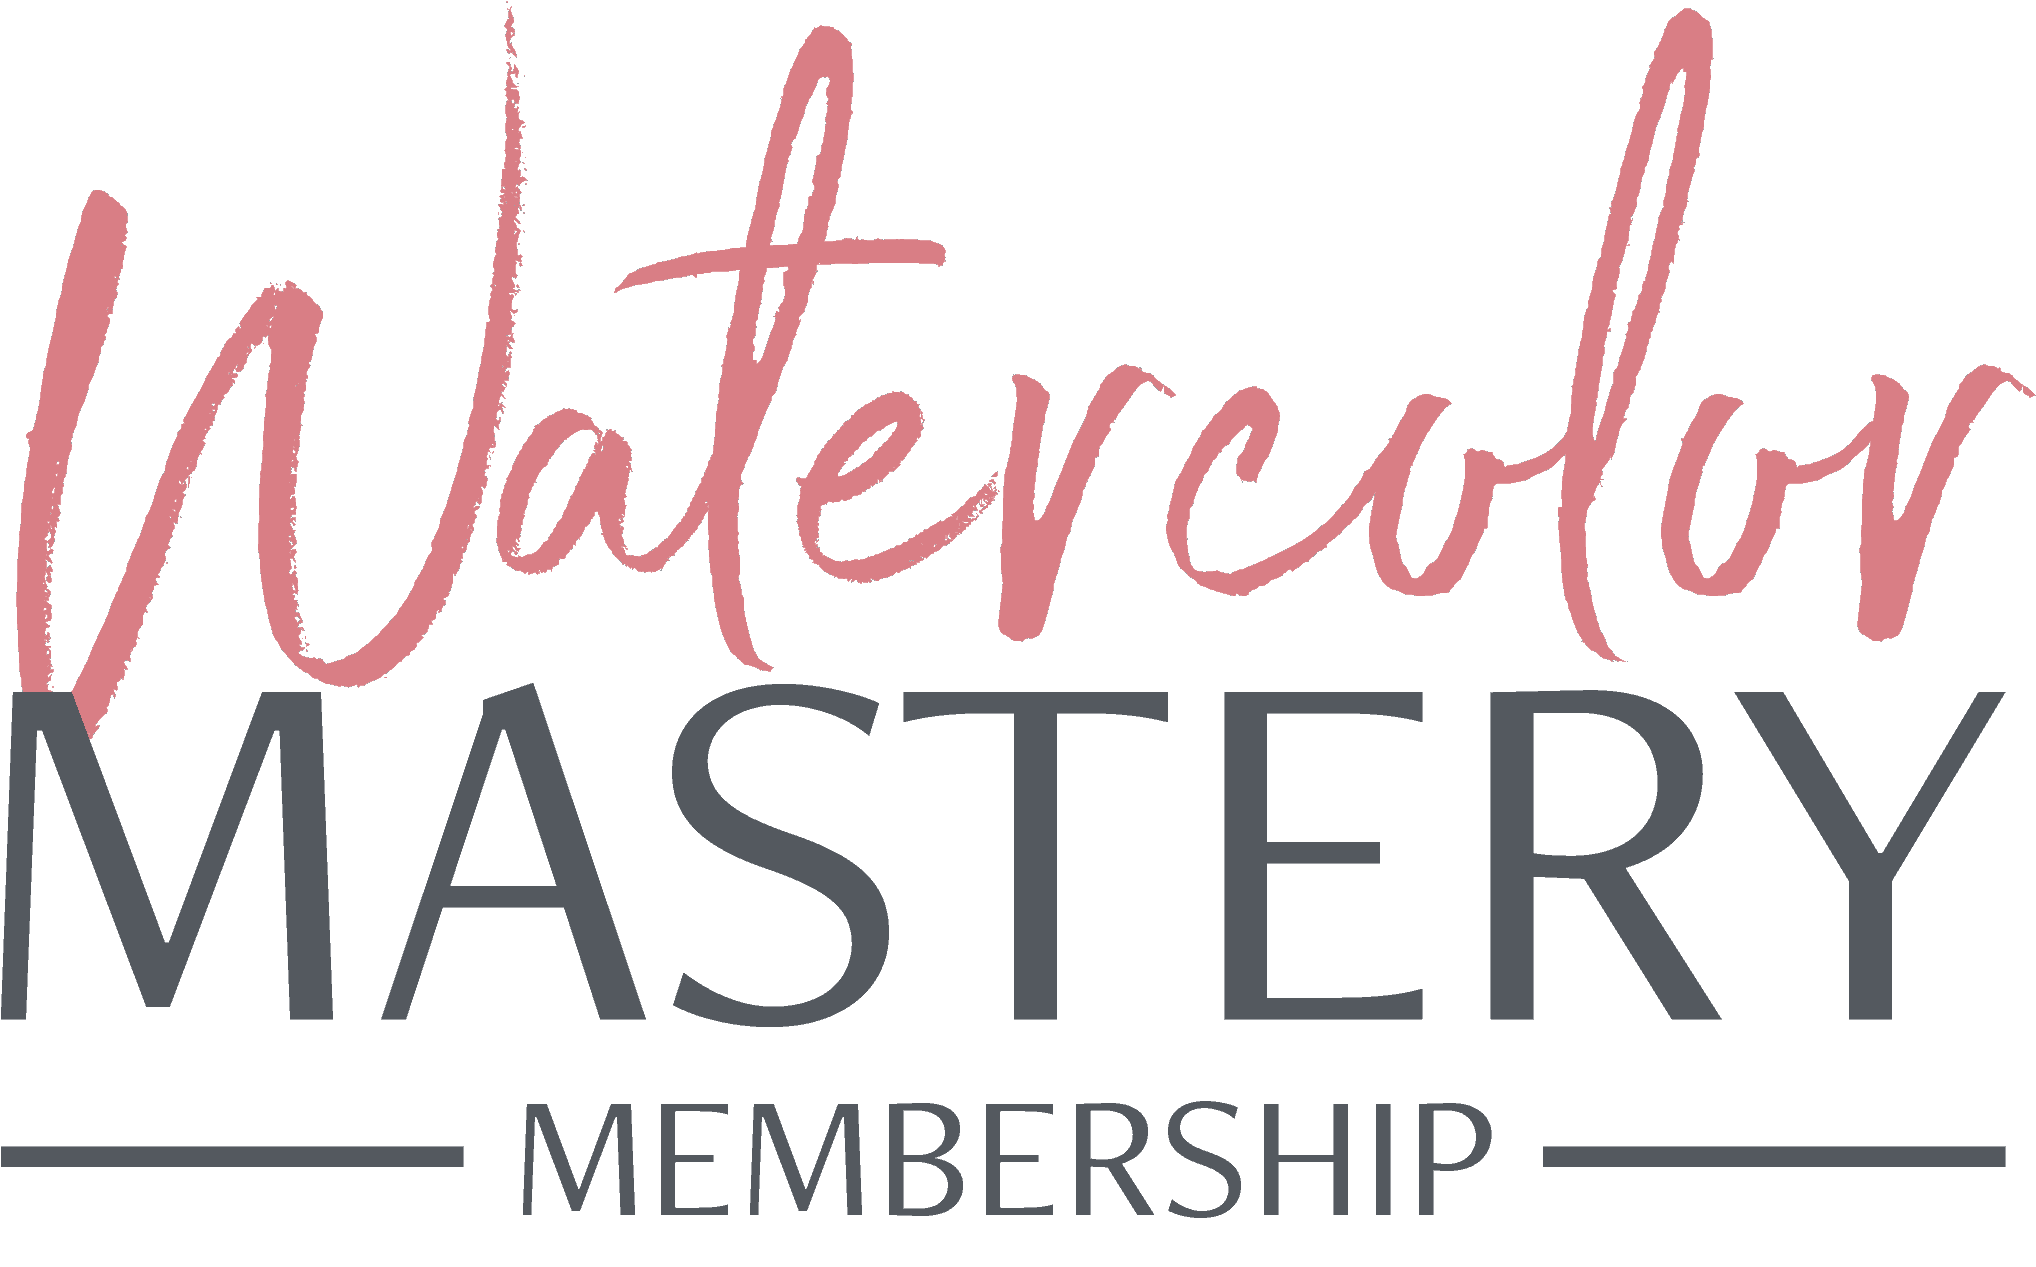 Watercolor Mastery_V3.0 - membership